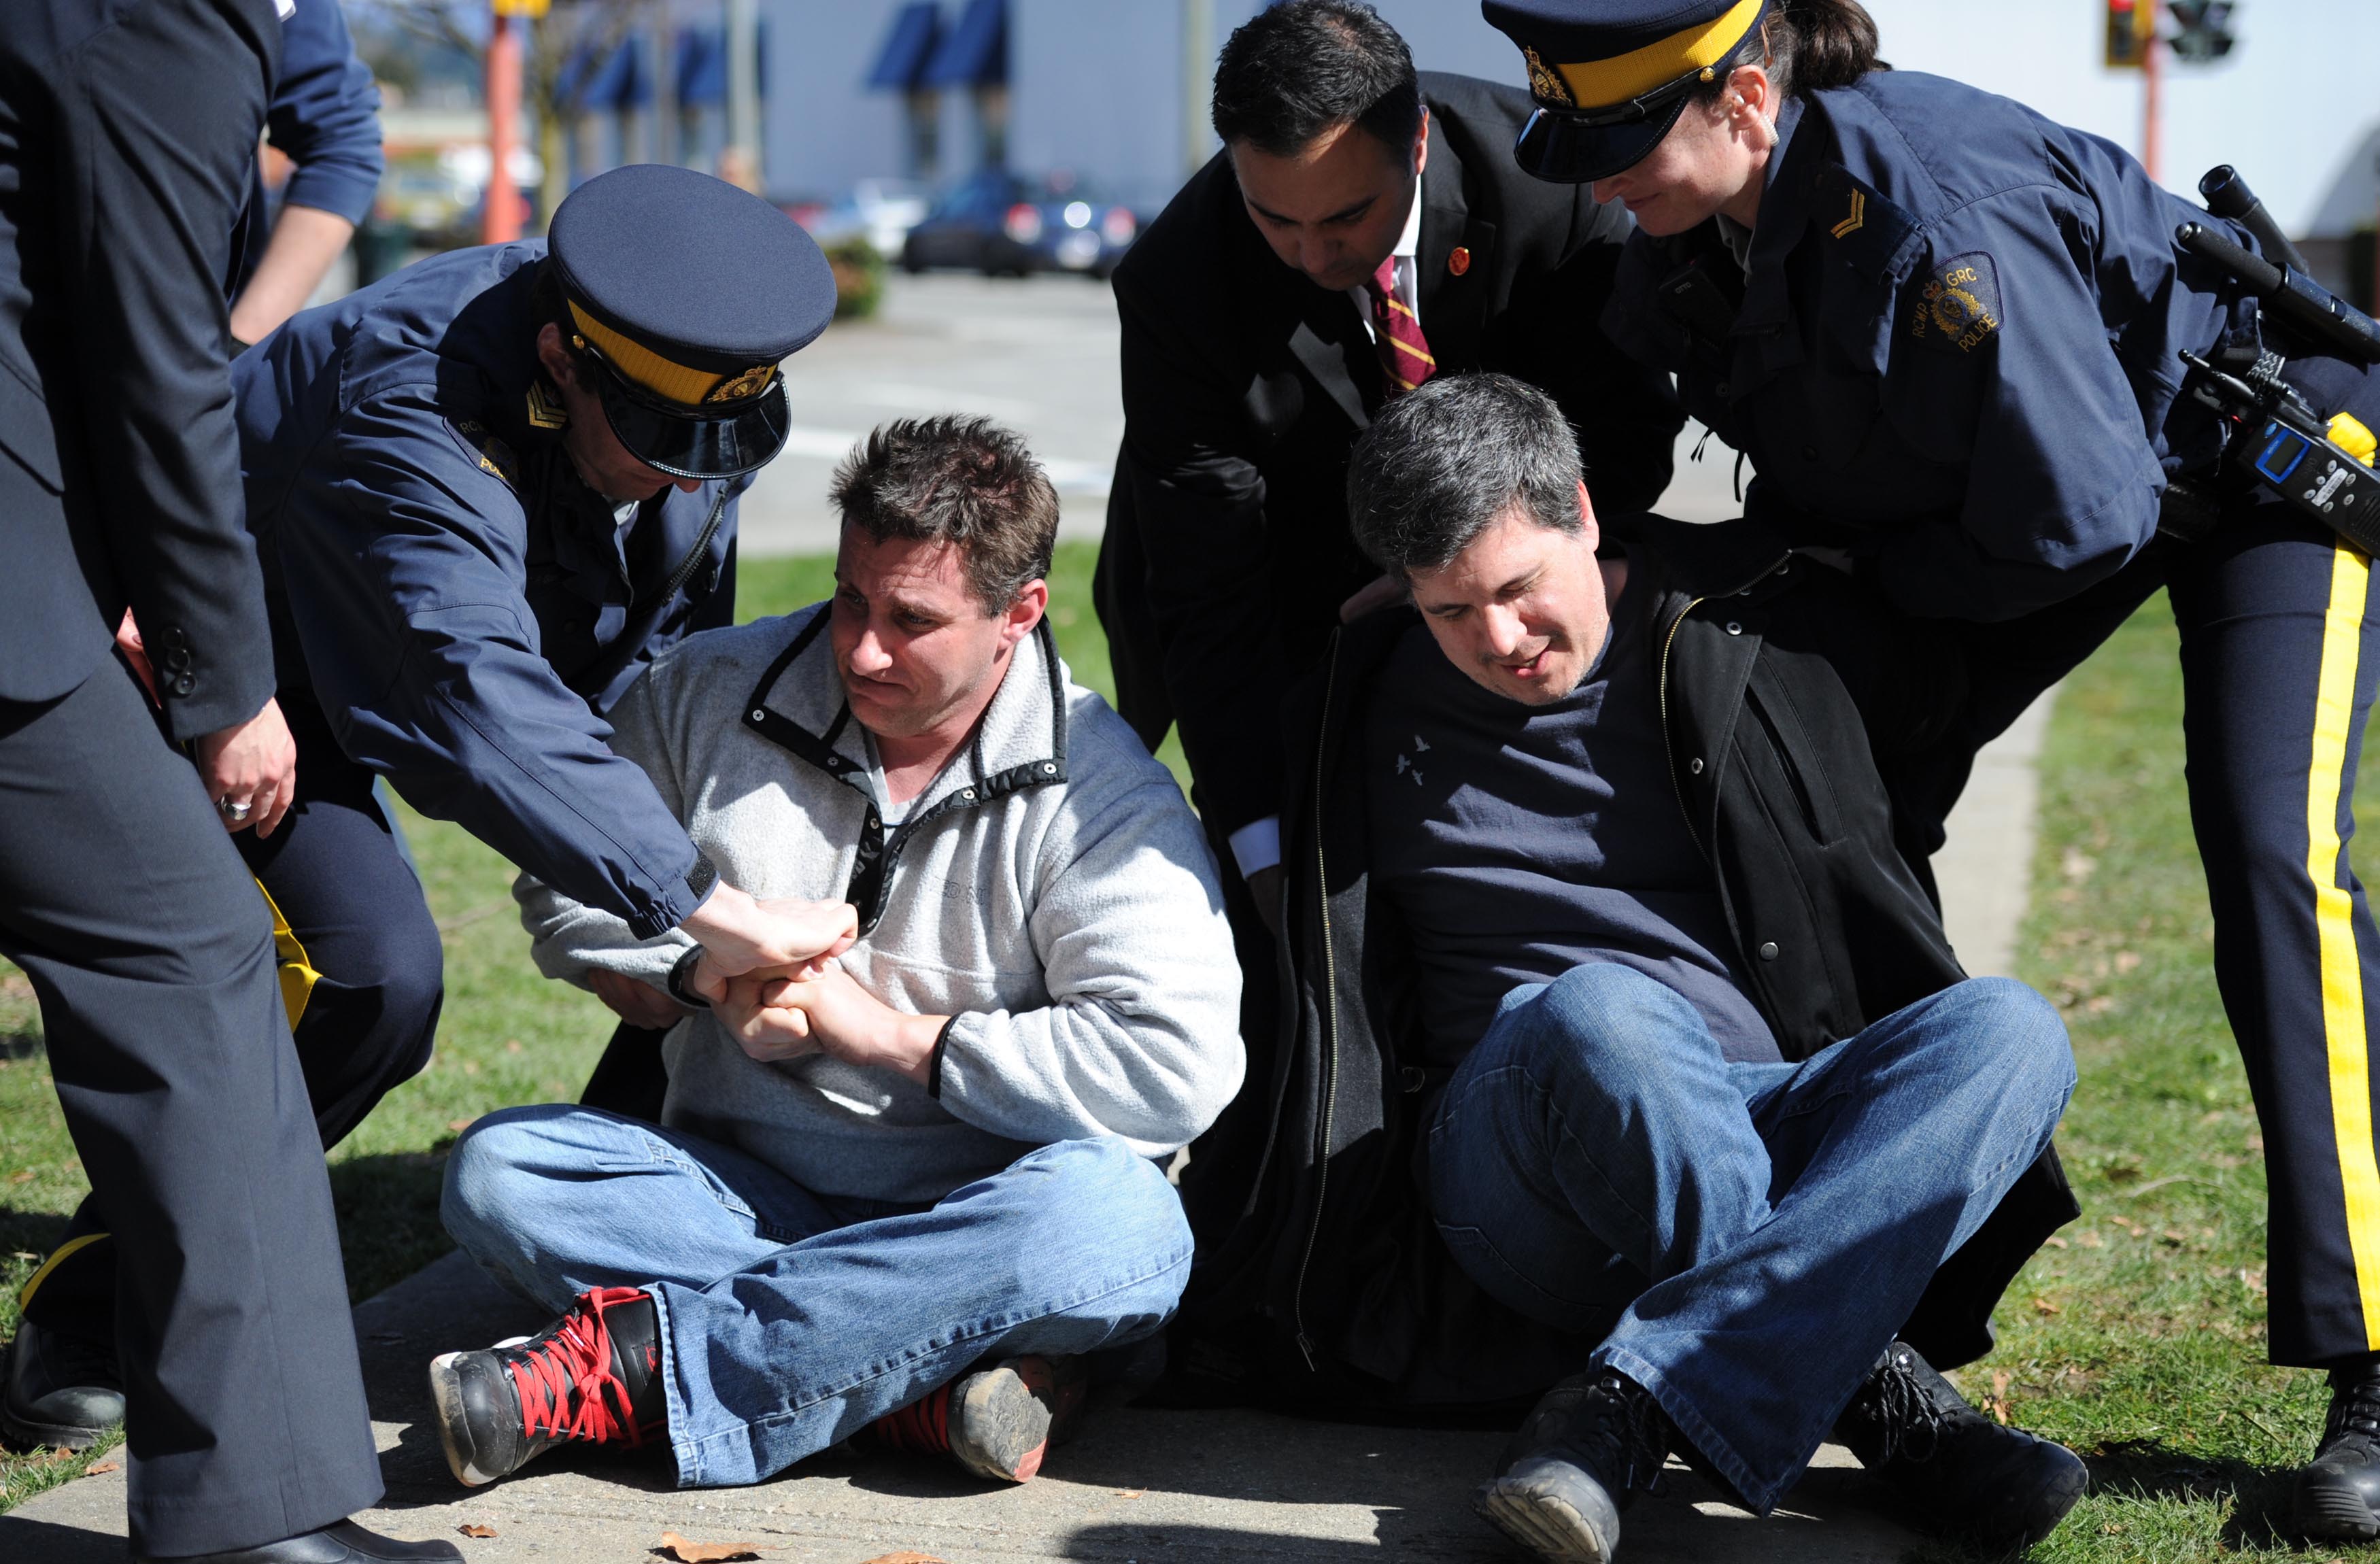 IMIM On-set - RCMP Multi-media - Protestors being arrested..